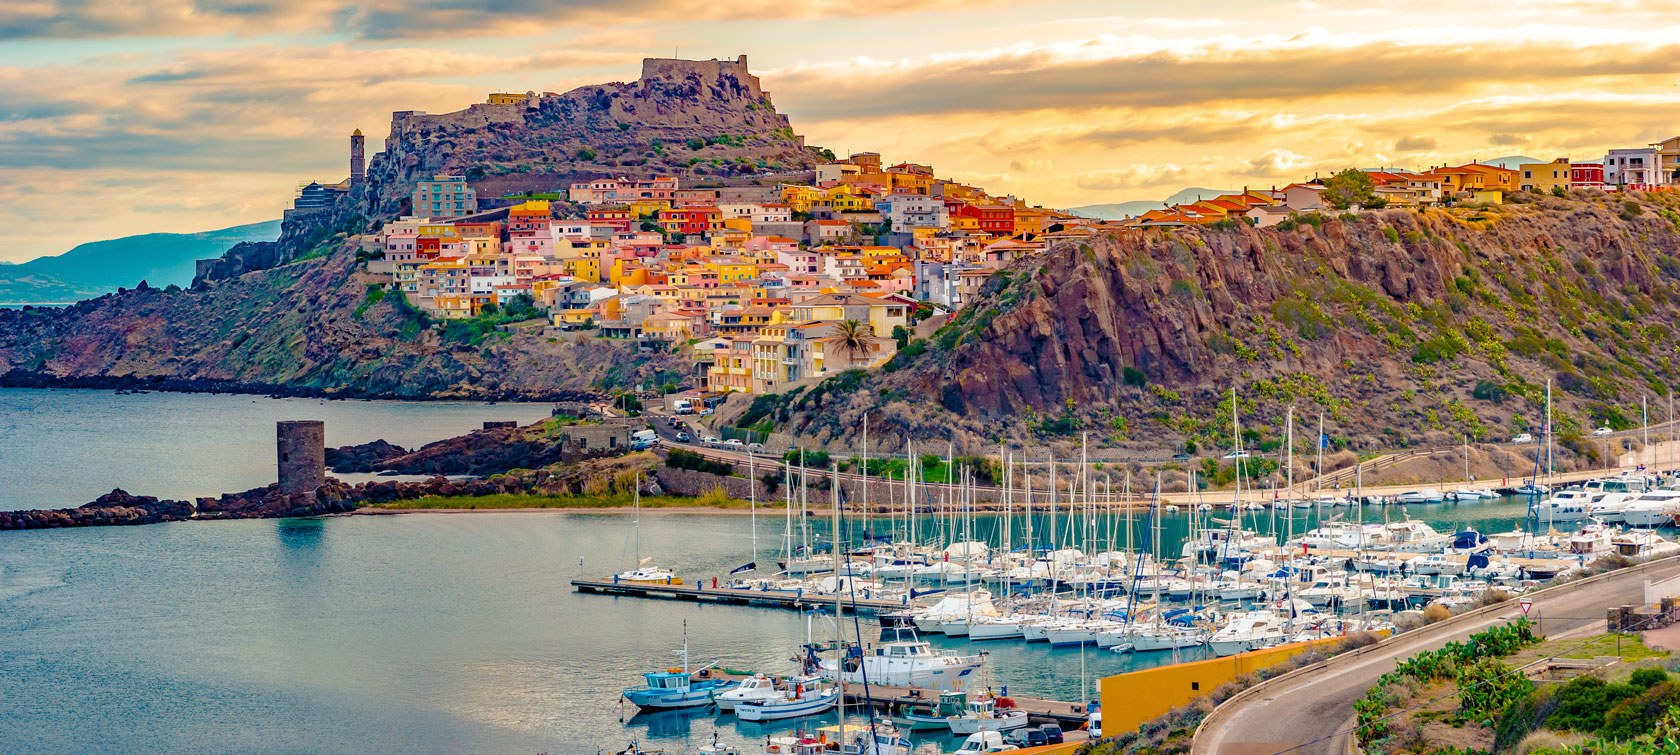 Sardinia, Island in the Mediterranean Sea